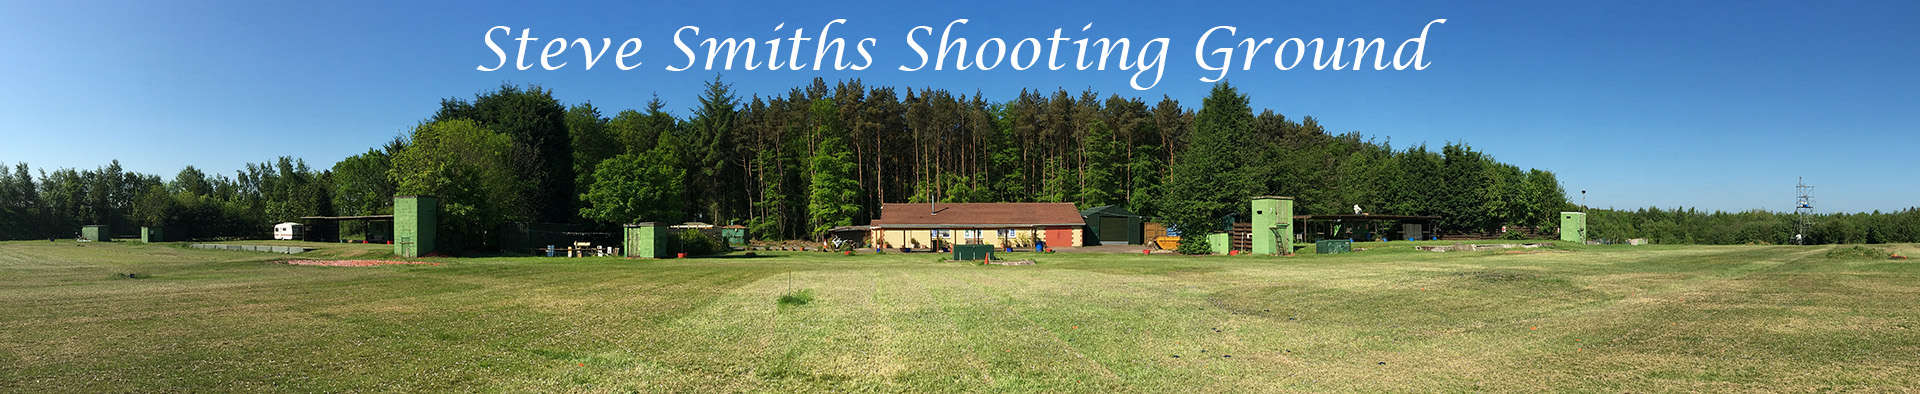 Steve Smiths Shooting Ground in UK